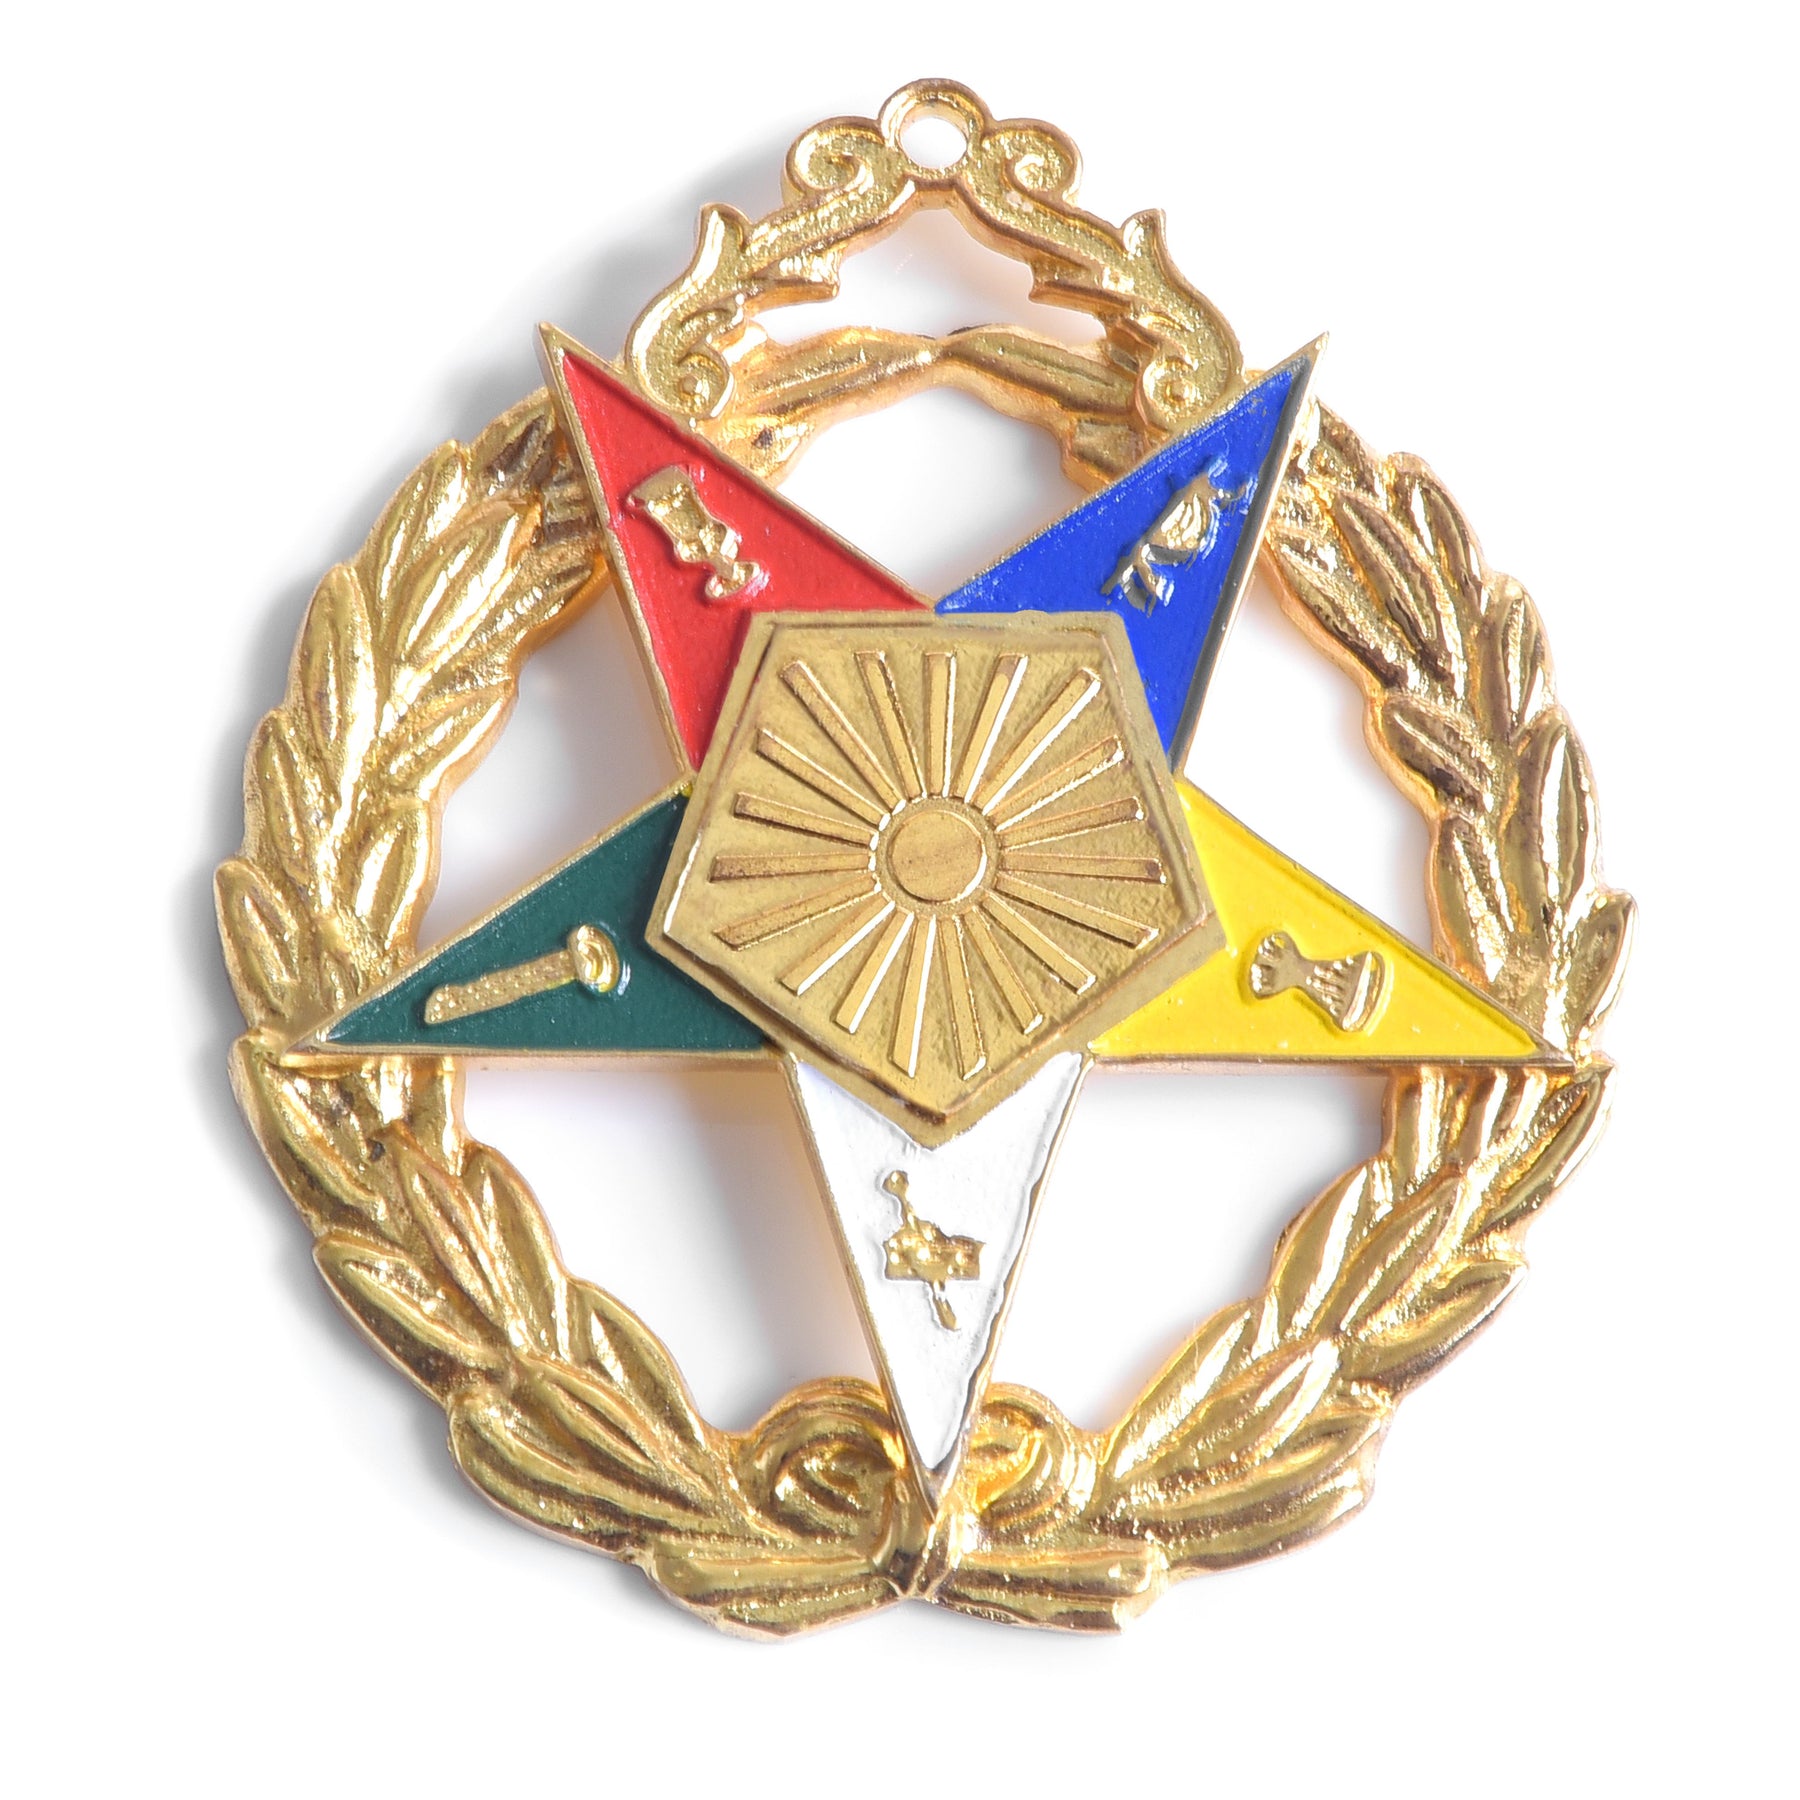 Grand Associate Matron OES Officer Collar Jewel - Gold Plated Colorful Star - Bricks Masons